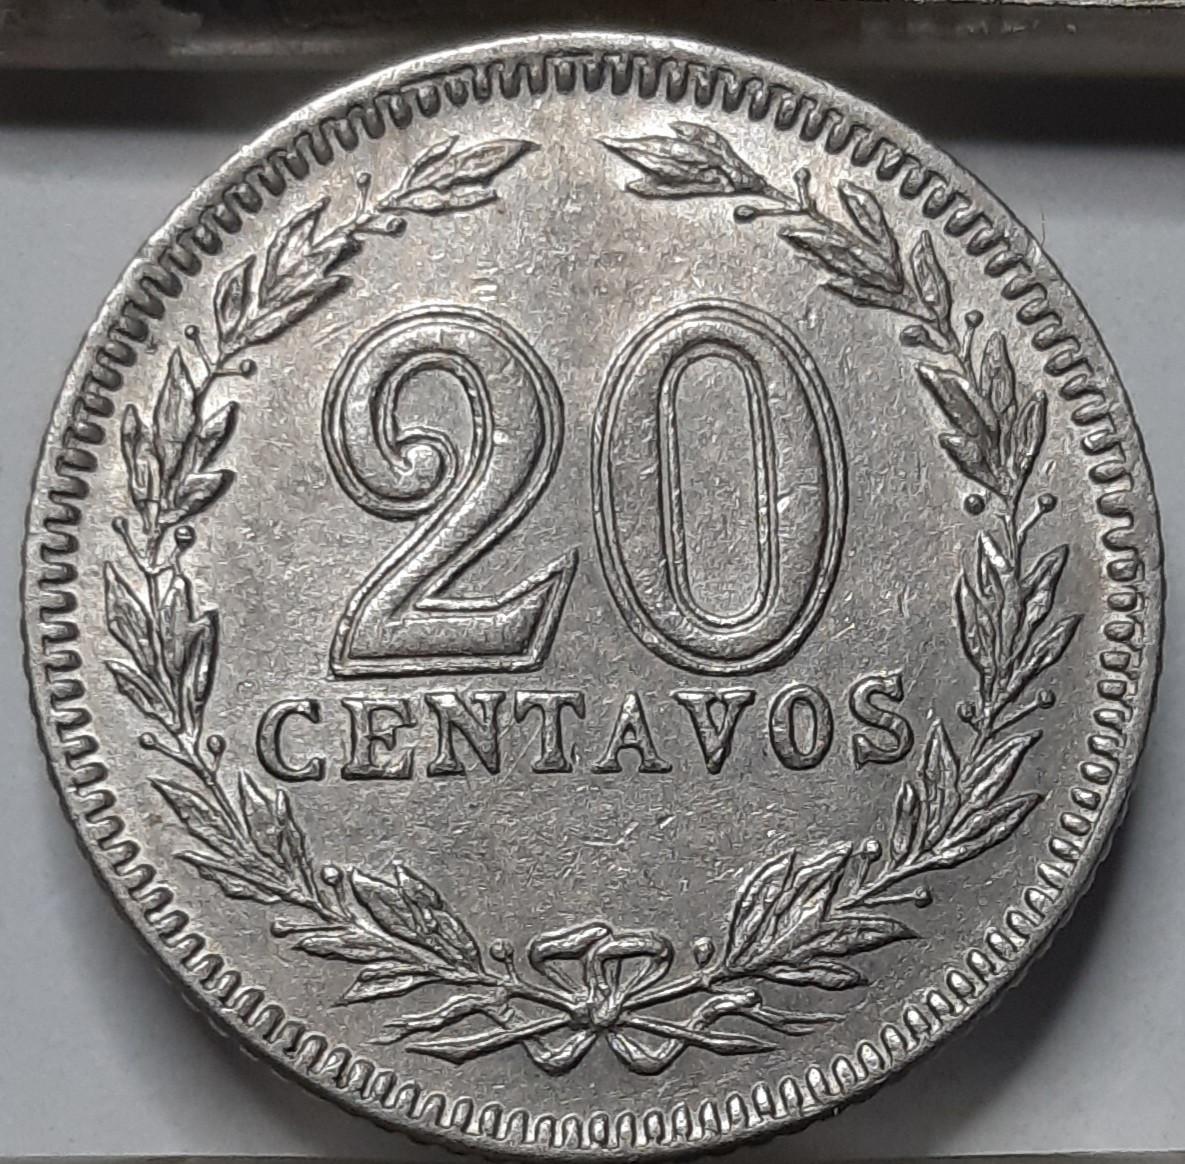 Argentina 20 Sentavų 1907 KM#36 (5421) 